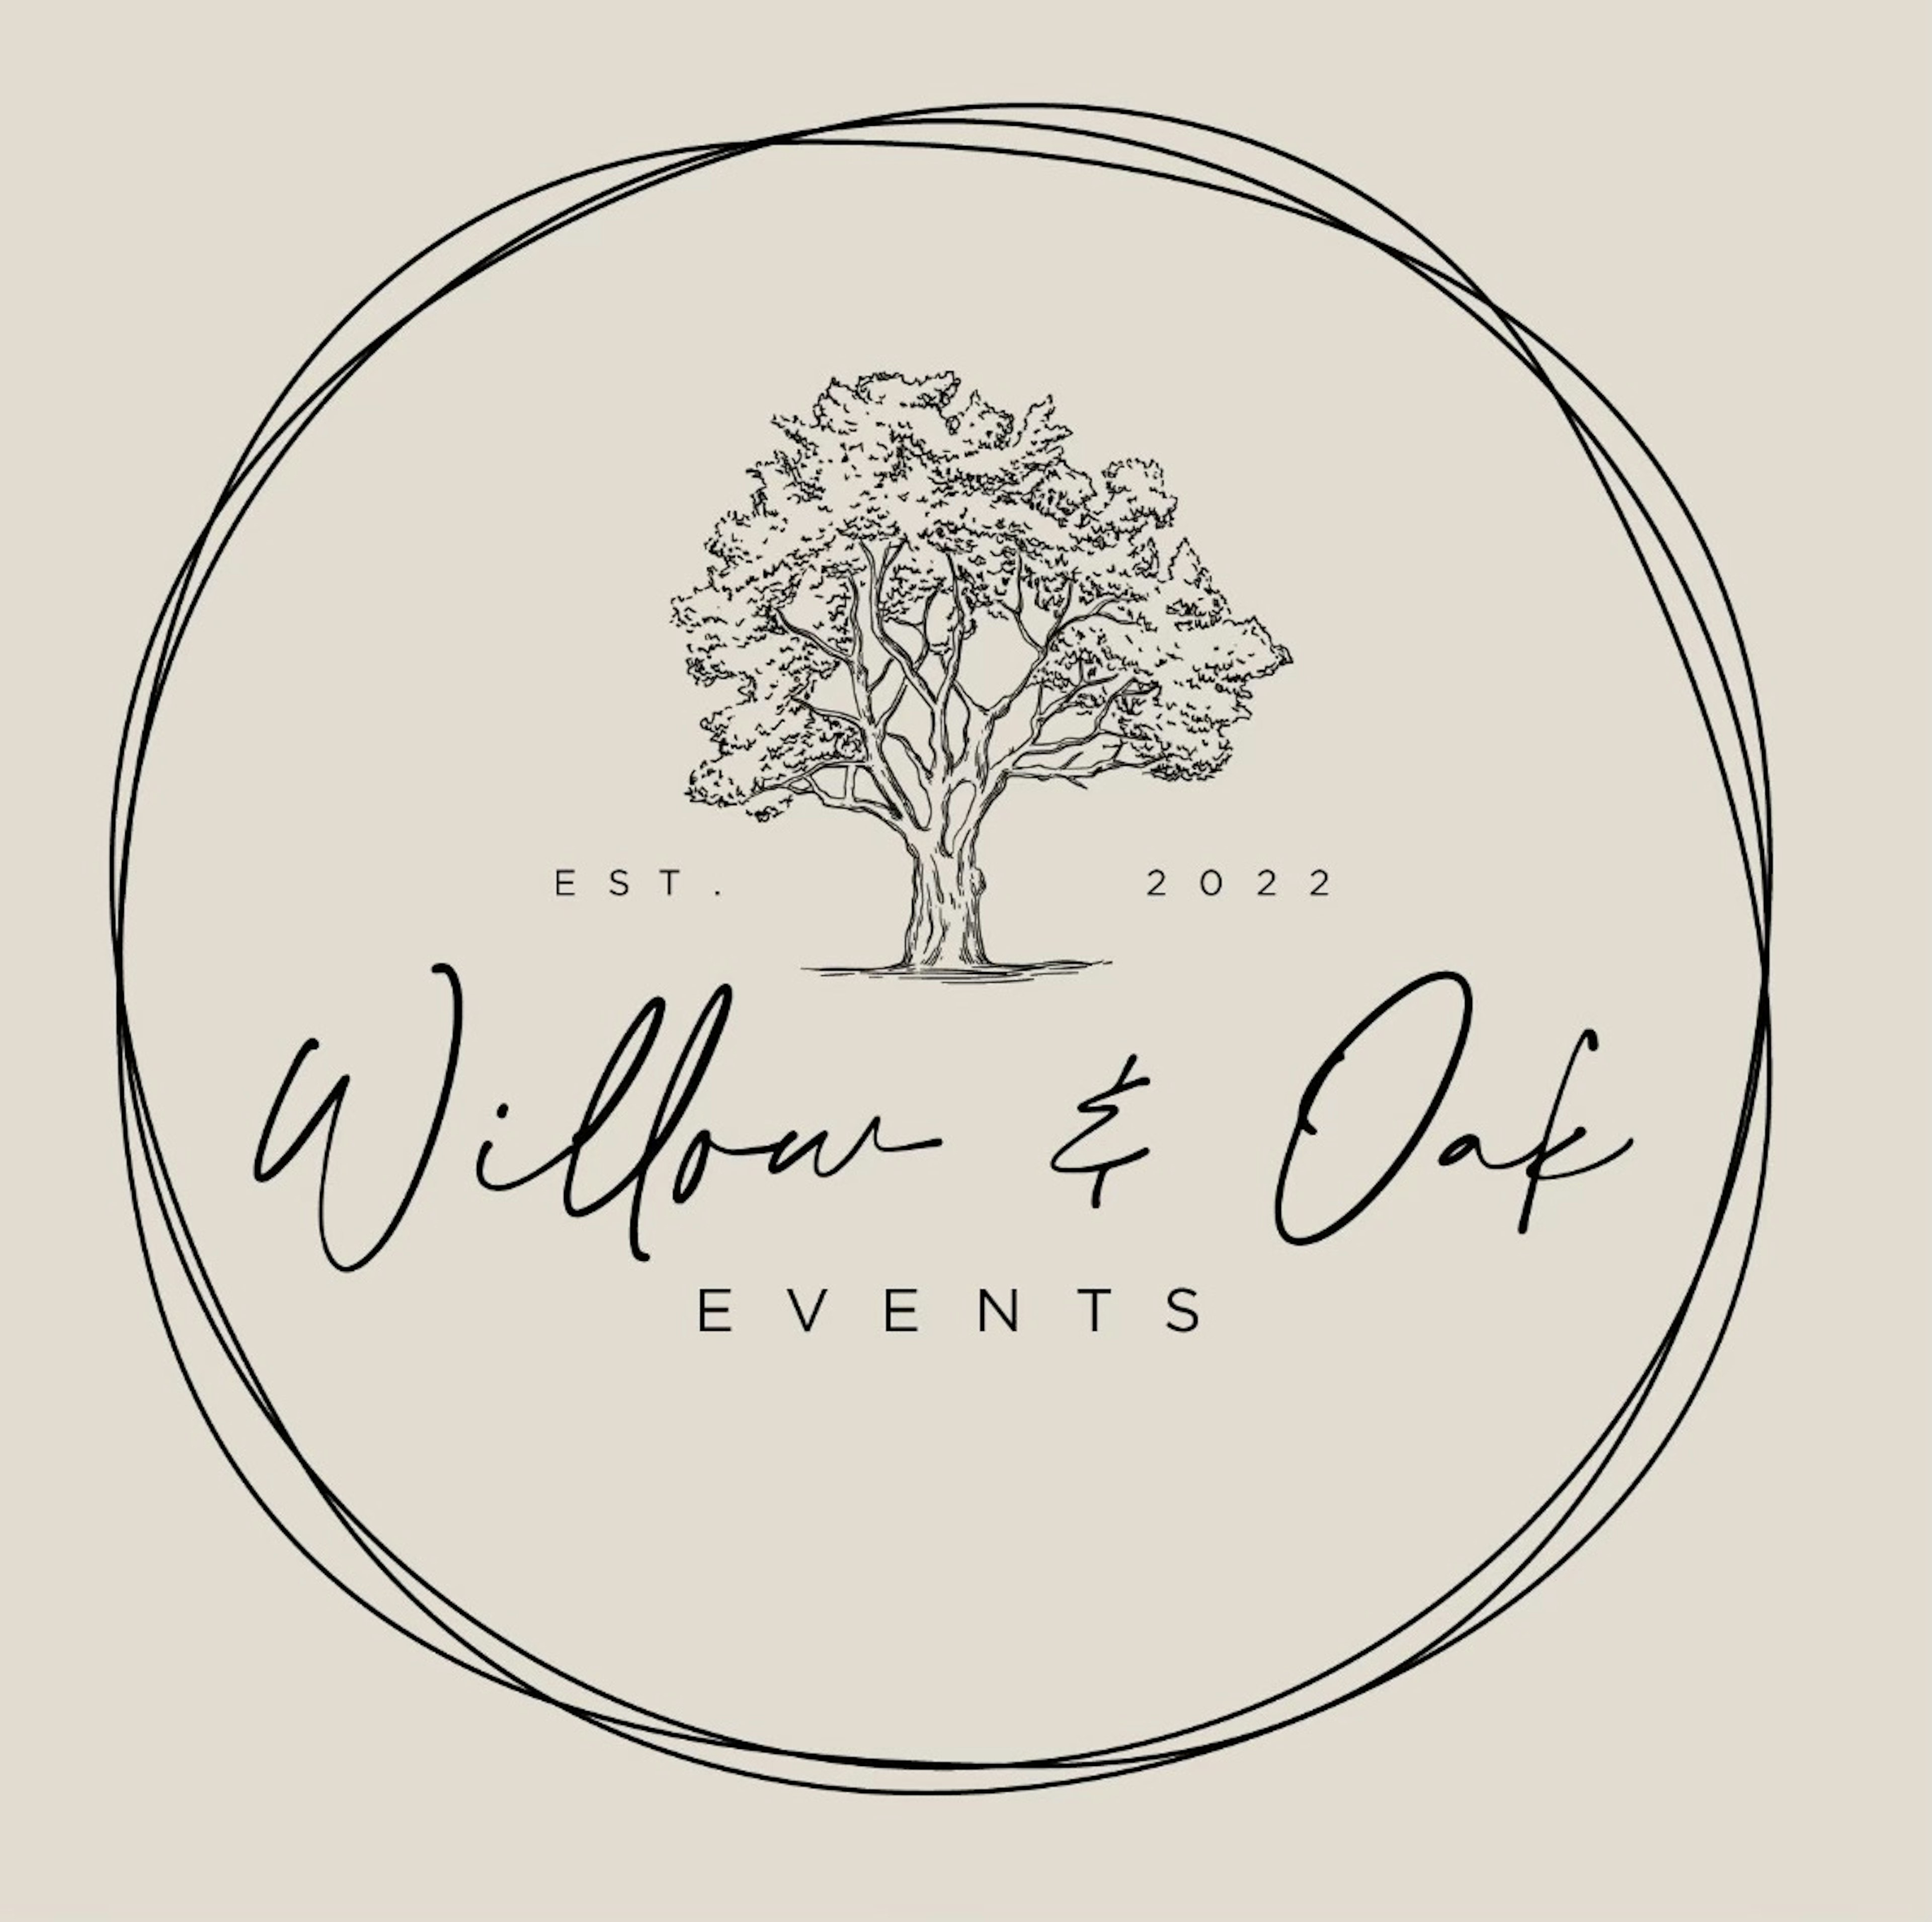 Willow Oak Events logo